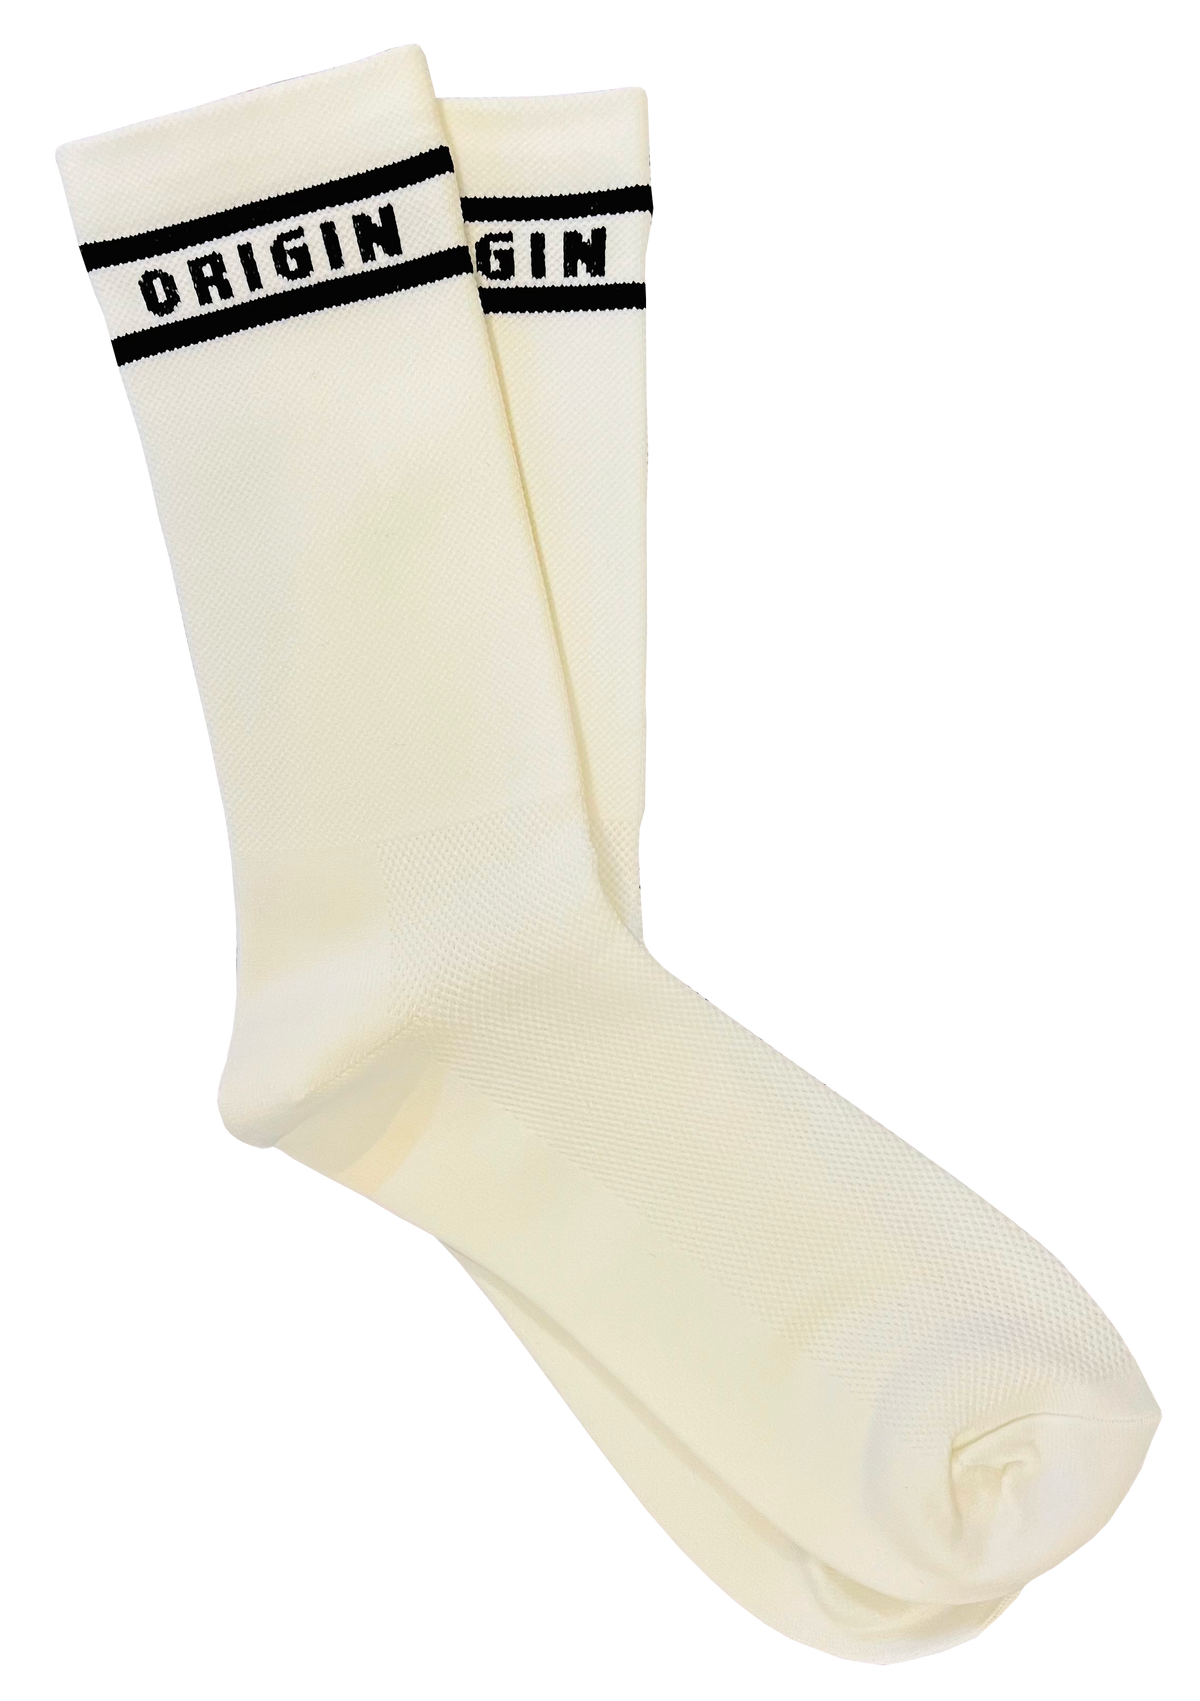 Super Sport ORIGINal recipe Race Socks - Men's size 7 - 12